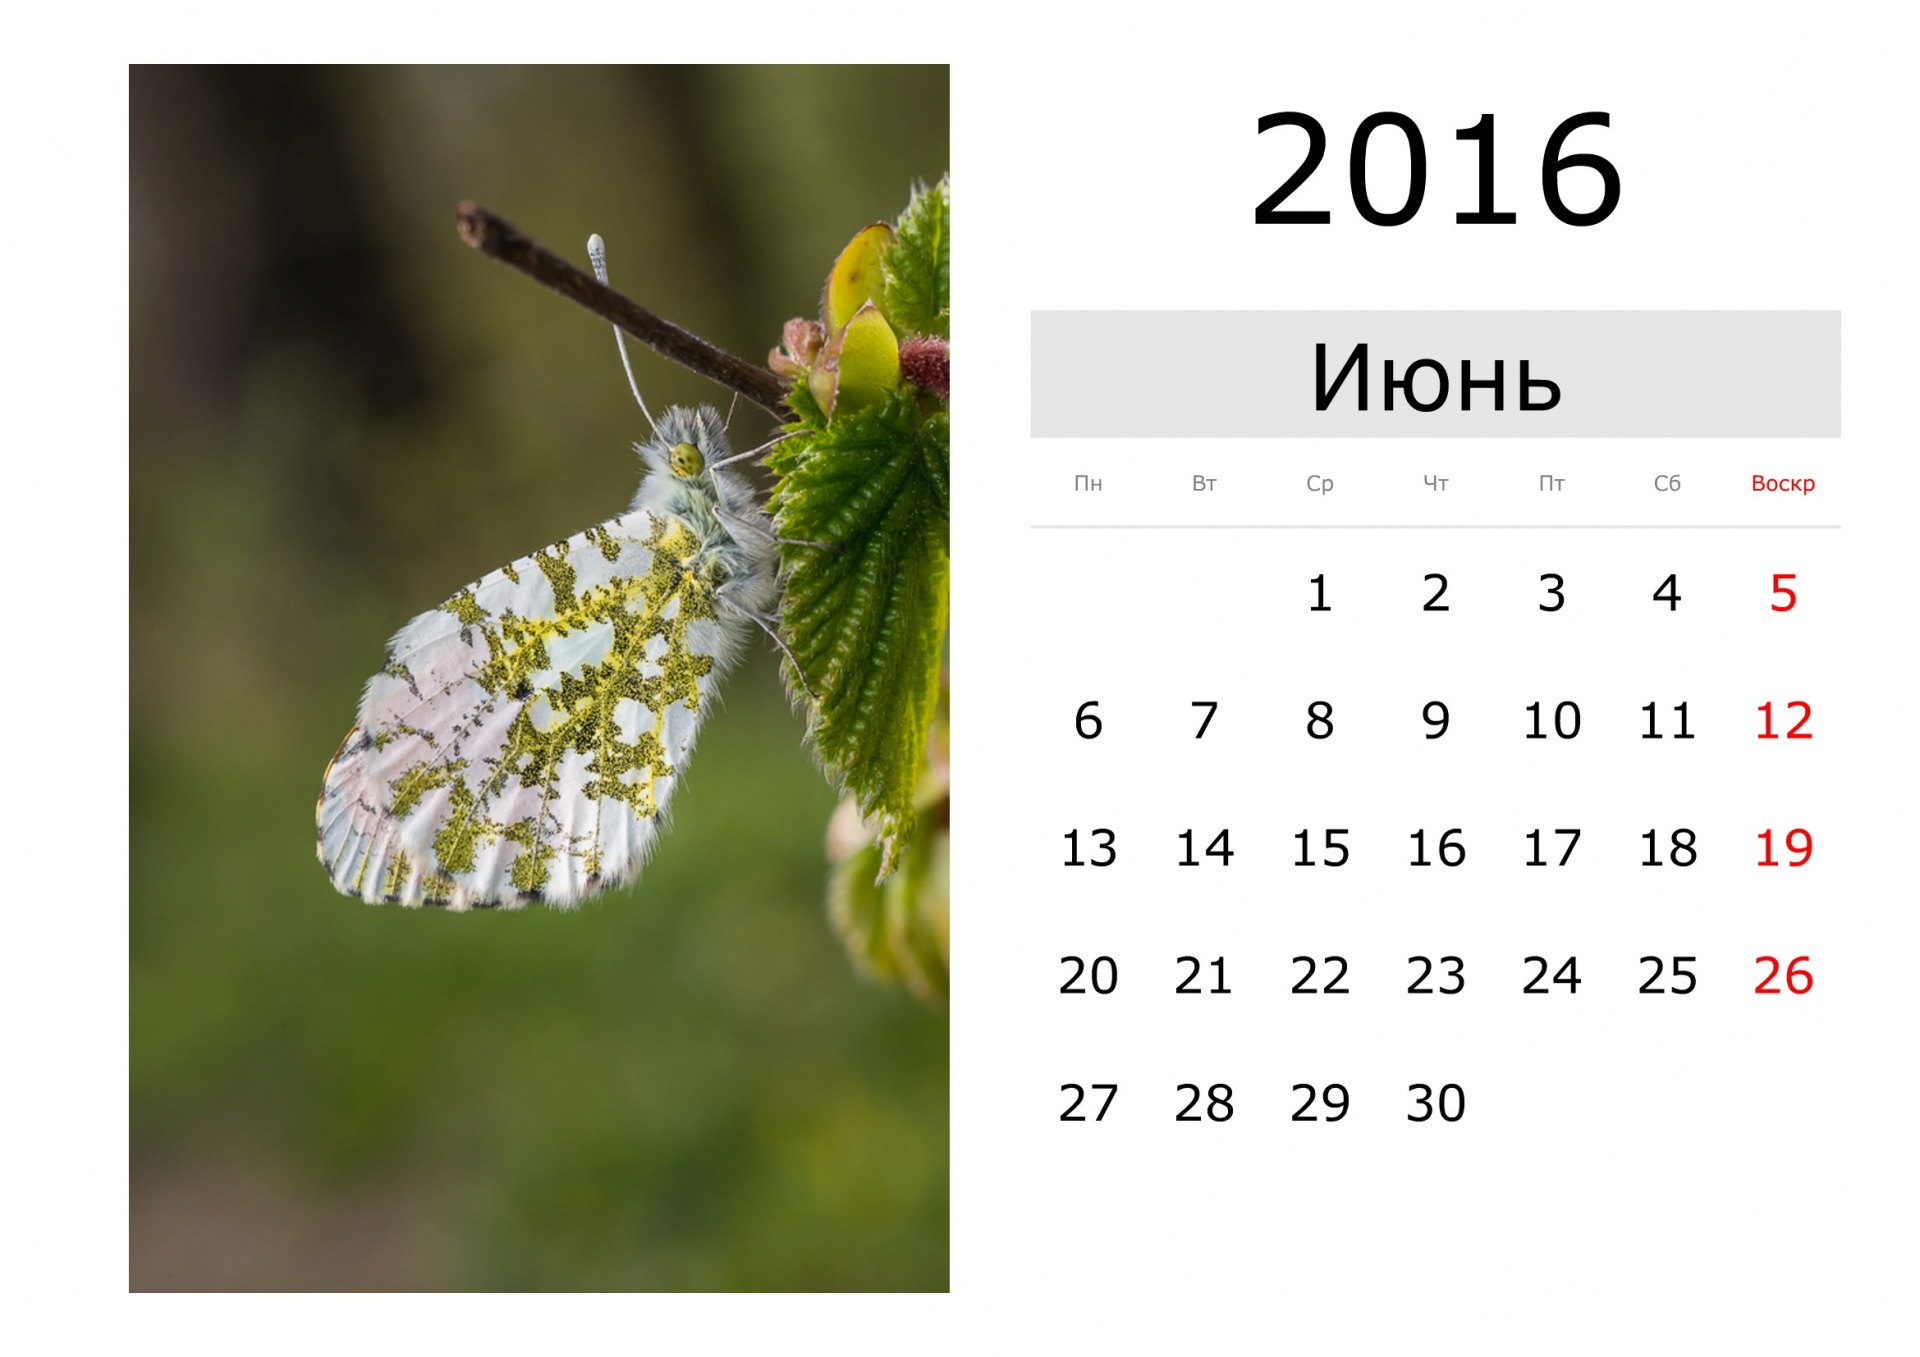 Календарь на май месяц этого года. Календарь июнь. Июнь 2016 года календарь. Календарик на июнь. Июнь рисунок к календарю.